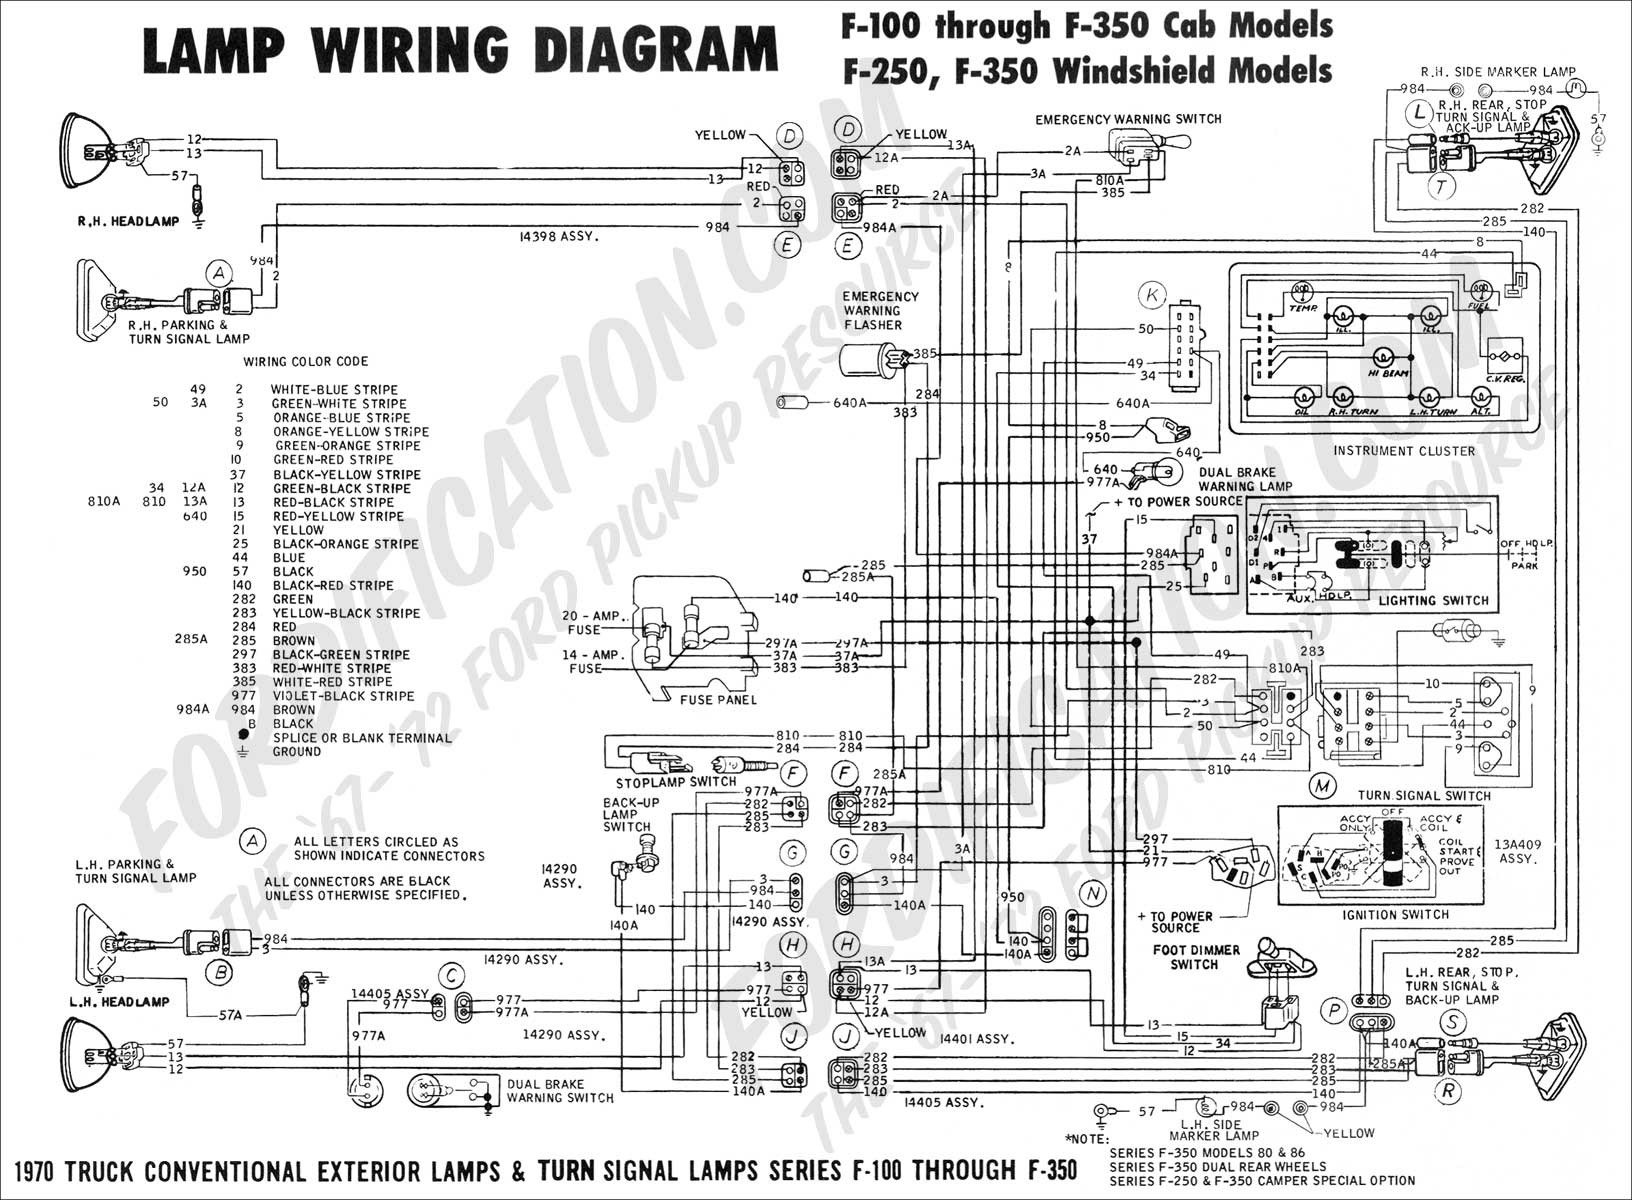 2002 ford Ranger Parts Diagram ford F 250 Diagram Wiring Diagram Of 2002 ford Ranger Parts Diagram